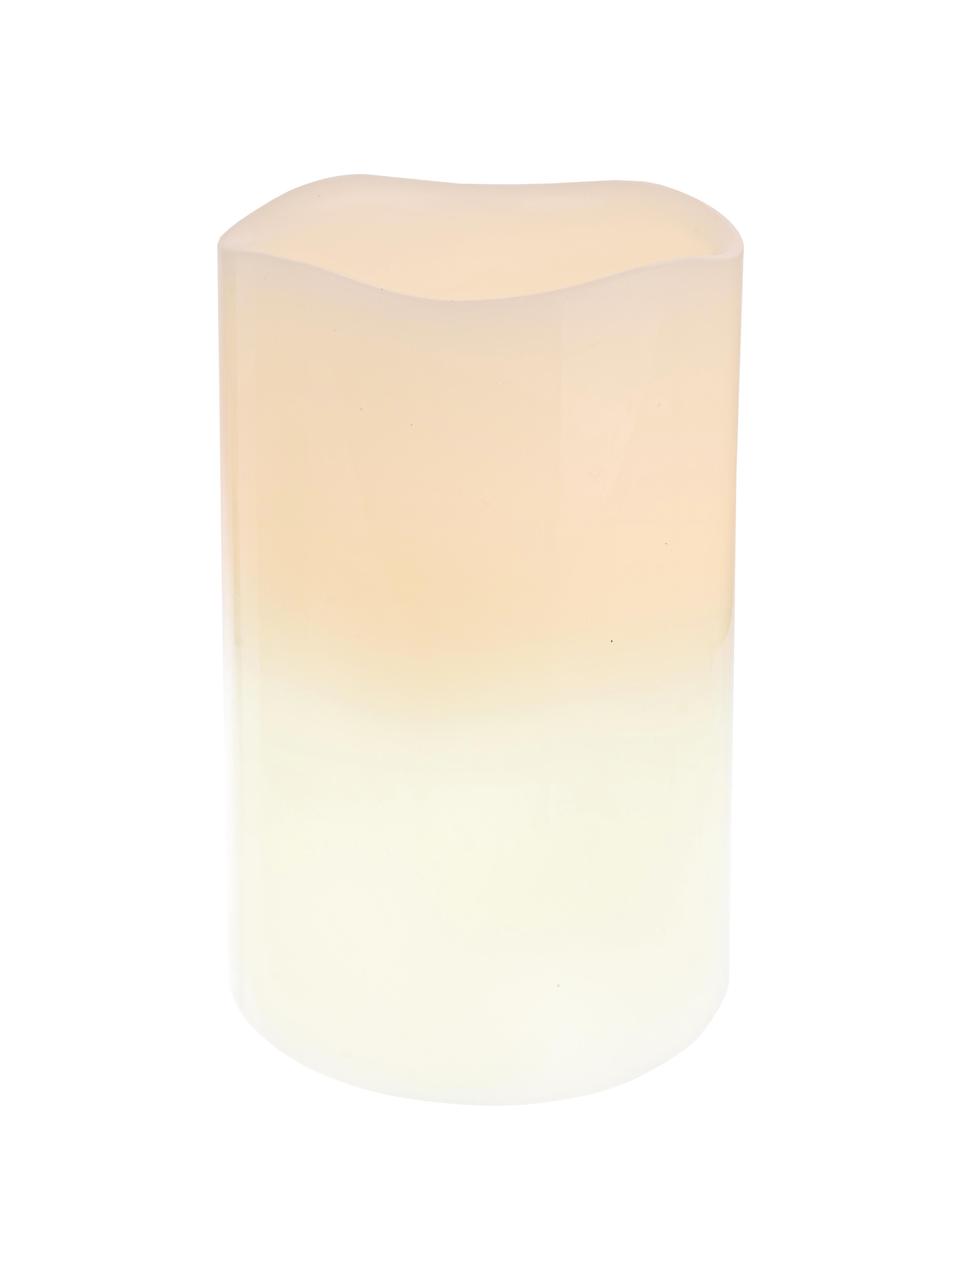 Bougie à LED Nadla, Beige, blanc, Ø 8 cm x haut. 12 cm